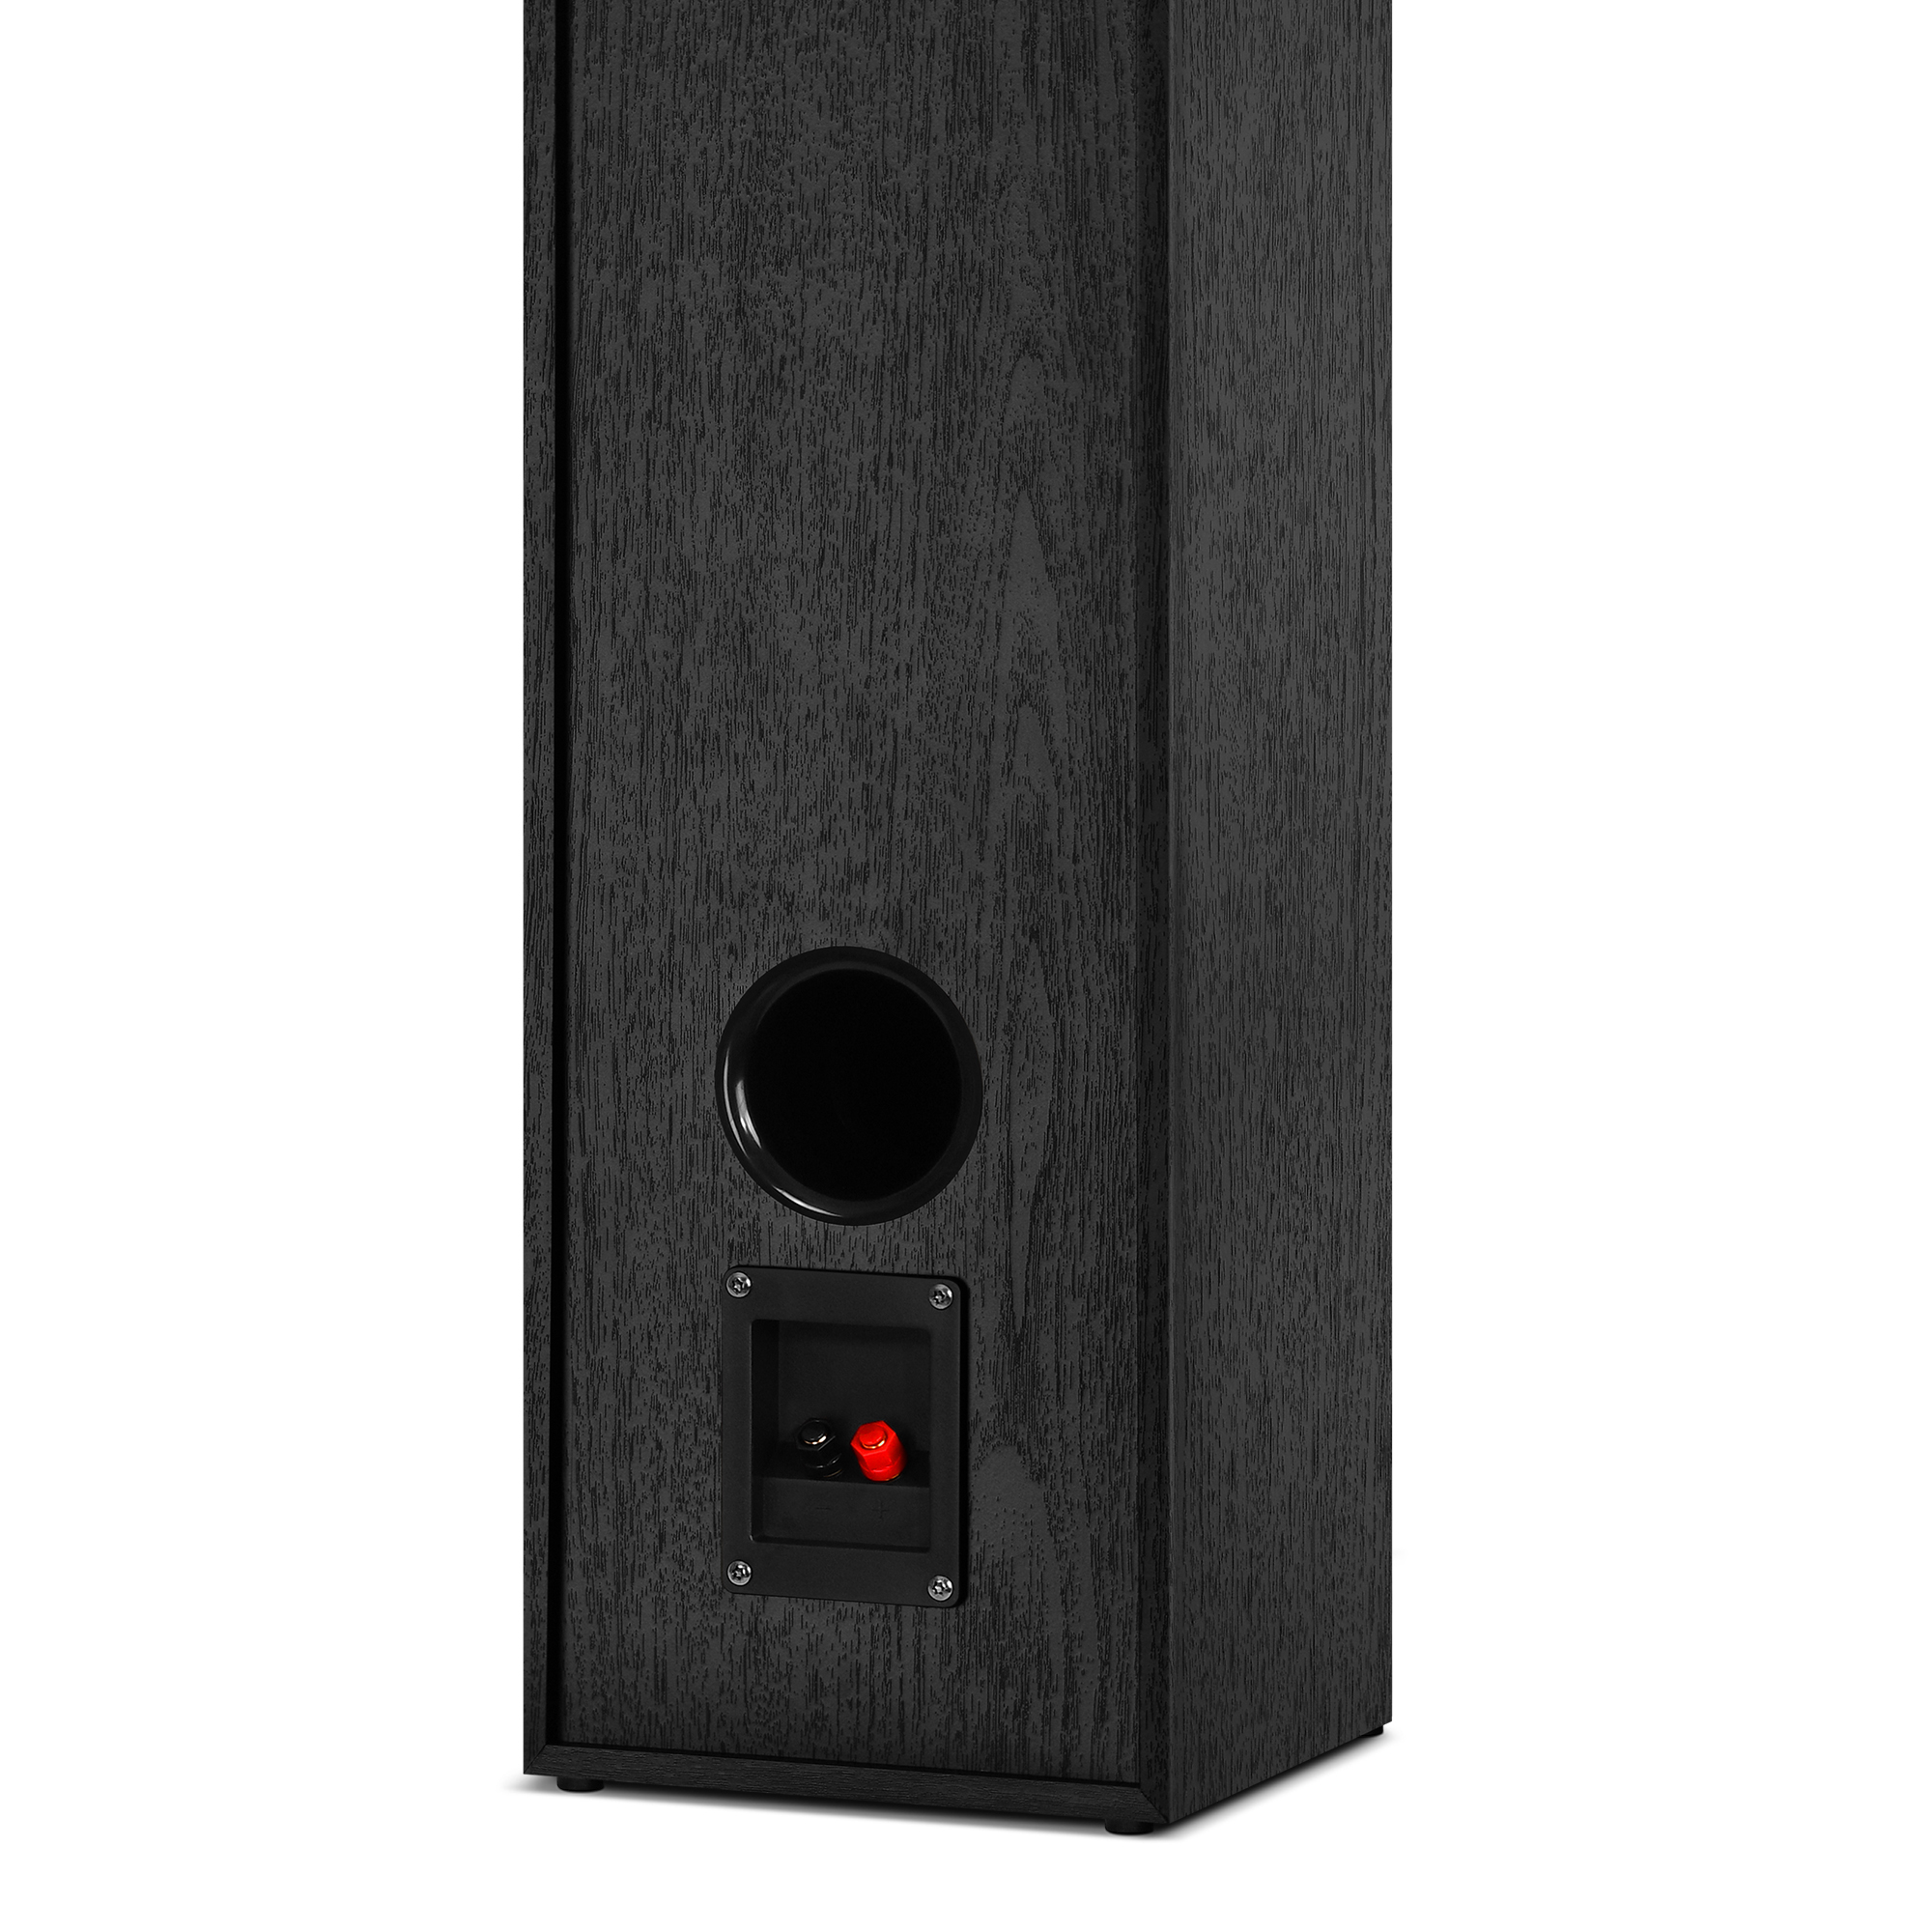 MOHR SL10, 1 HiFi Stereo Bass-Reflex, Standautsprecher 2-Wege schwarz Standlautsprecher, HiFi Paar, schwarz passiver